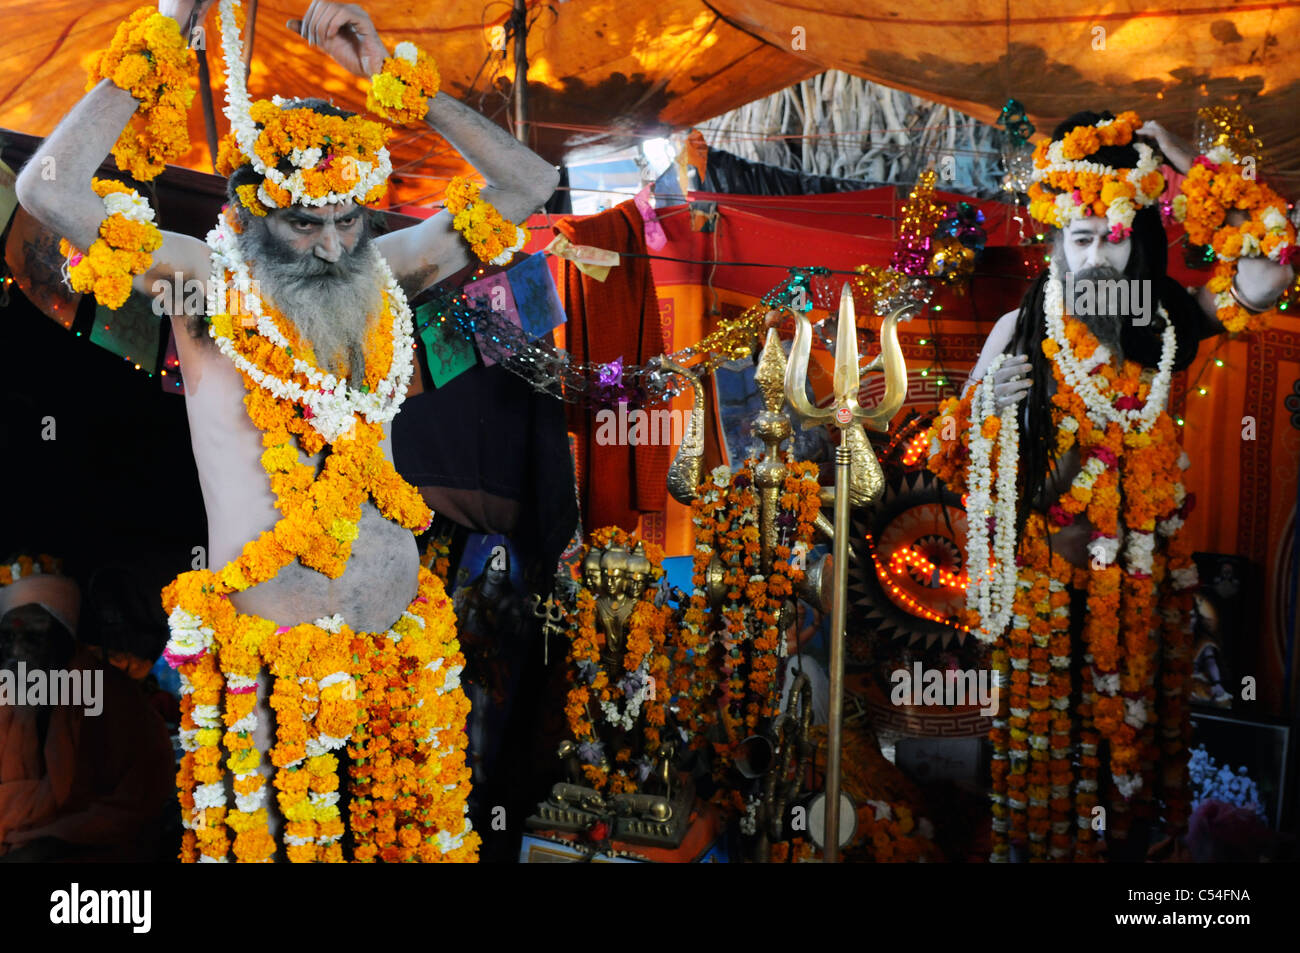 A sadhu (Hindu holy man) at the Kumbh Mela festival in India. Stock Photo